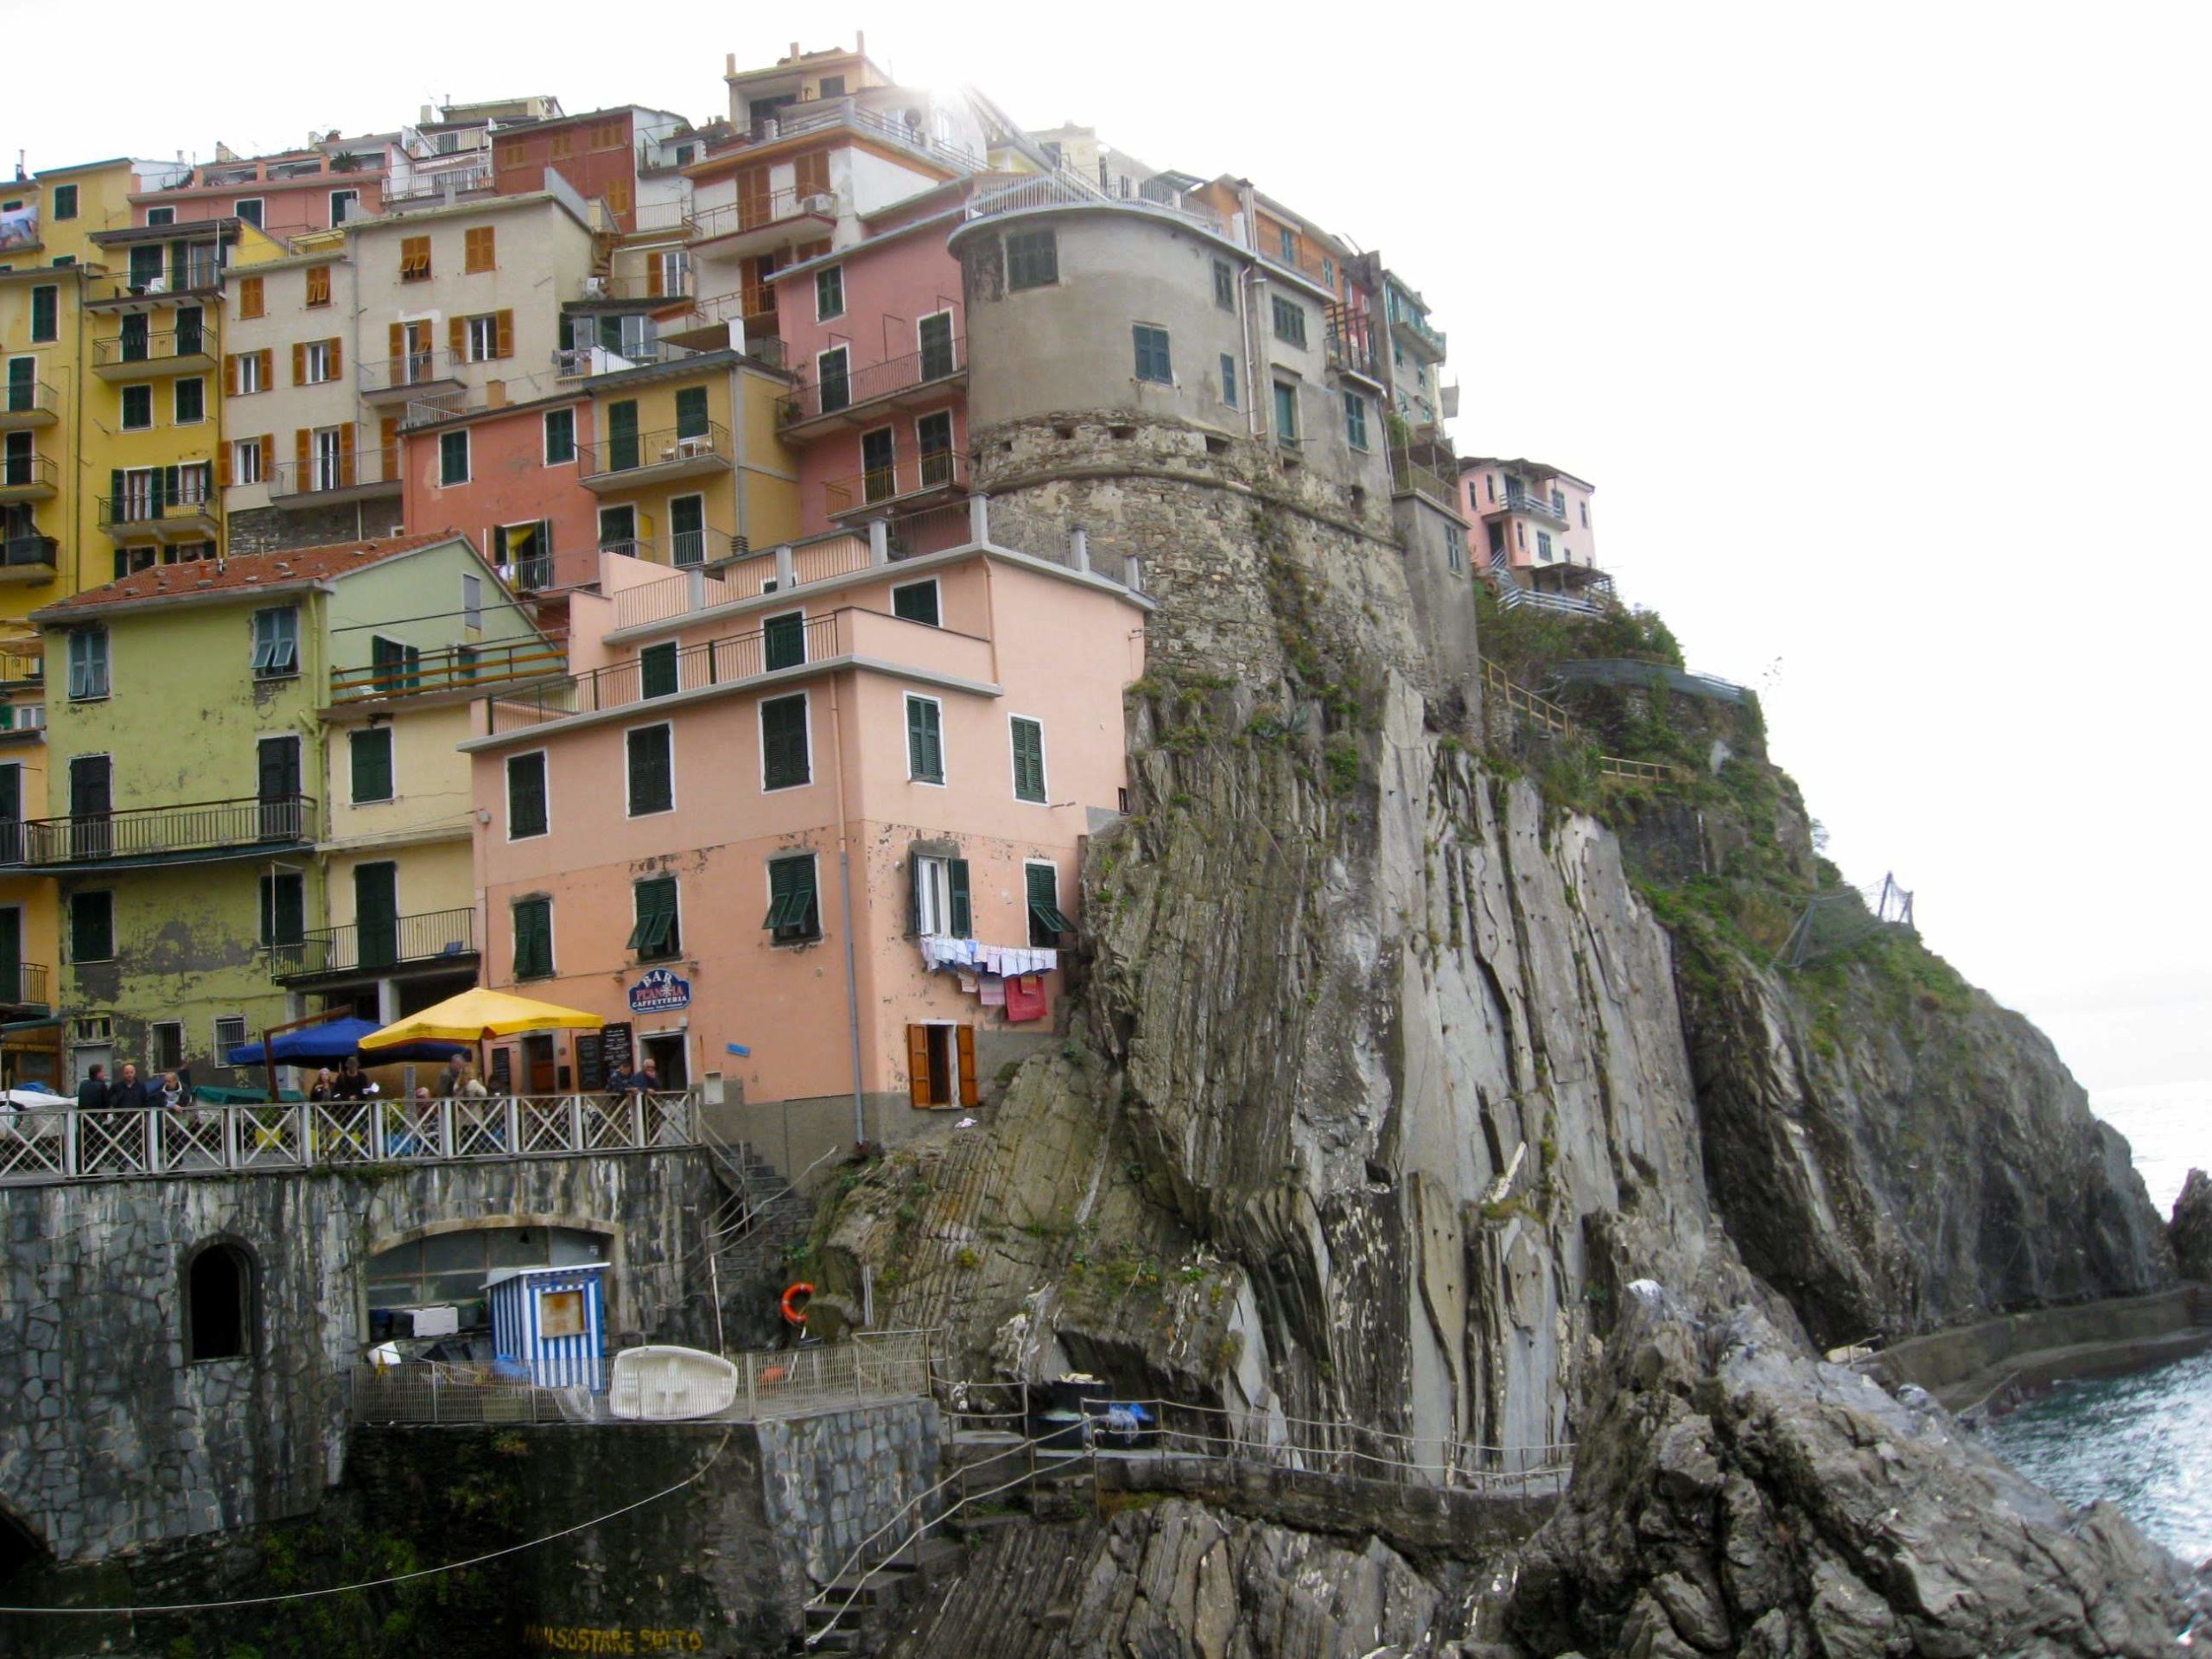 Cinque Terre, Italy (Photo: Evelyn Hannon)